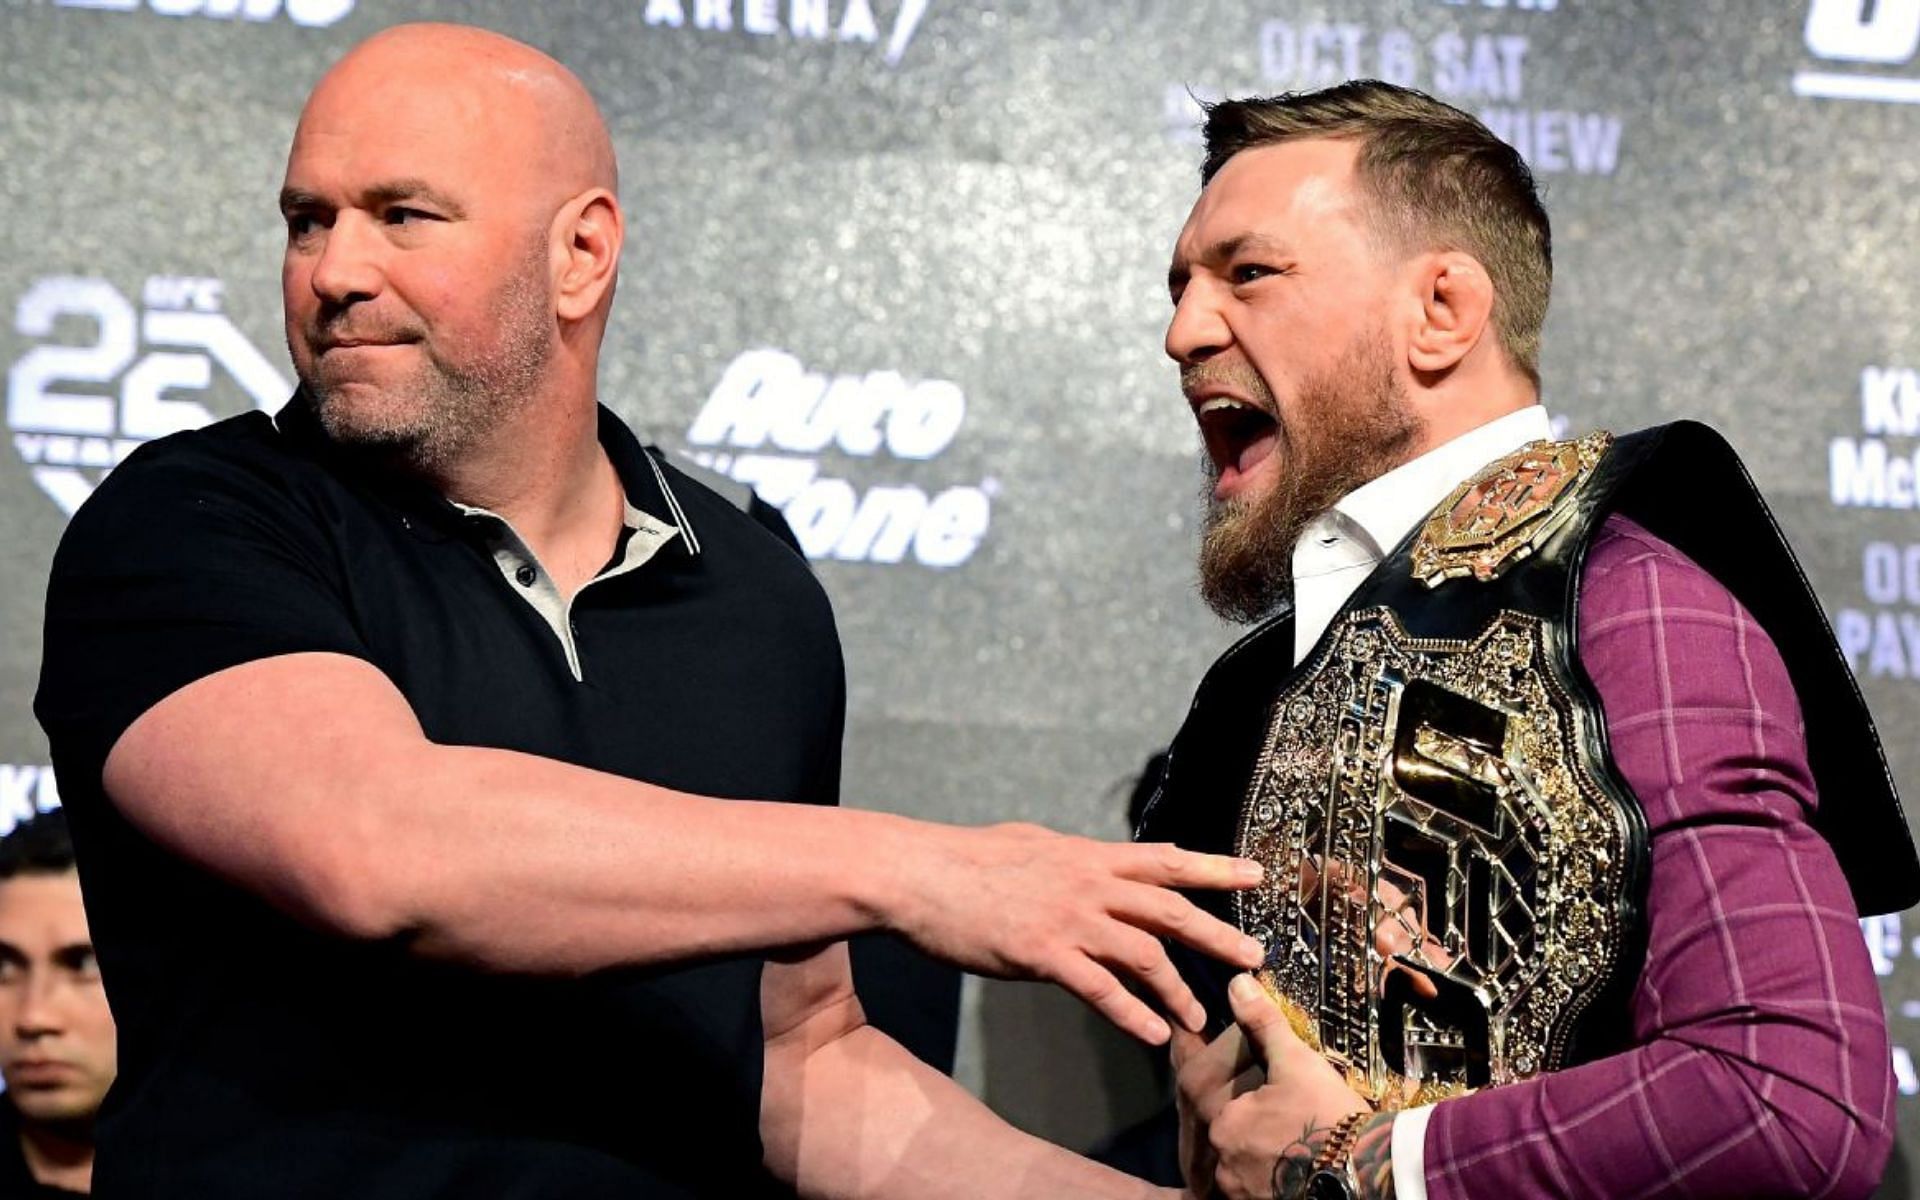 UFC president Dana White and Conor McGregor at UFC 229 press conference [Credits: @espnmma via Twitter]